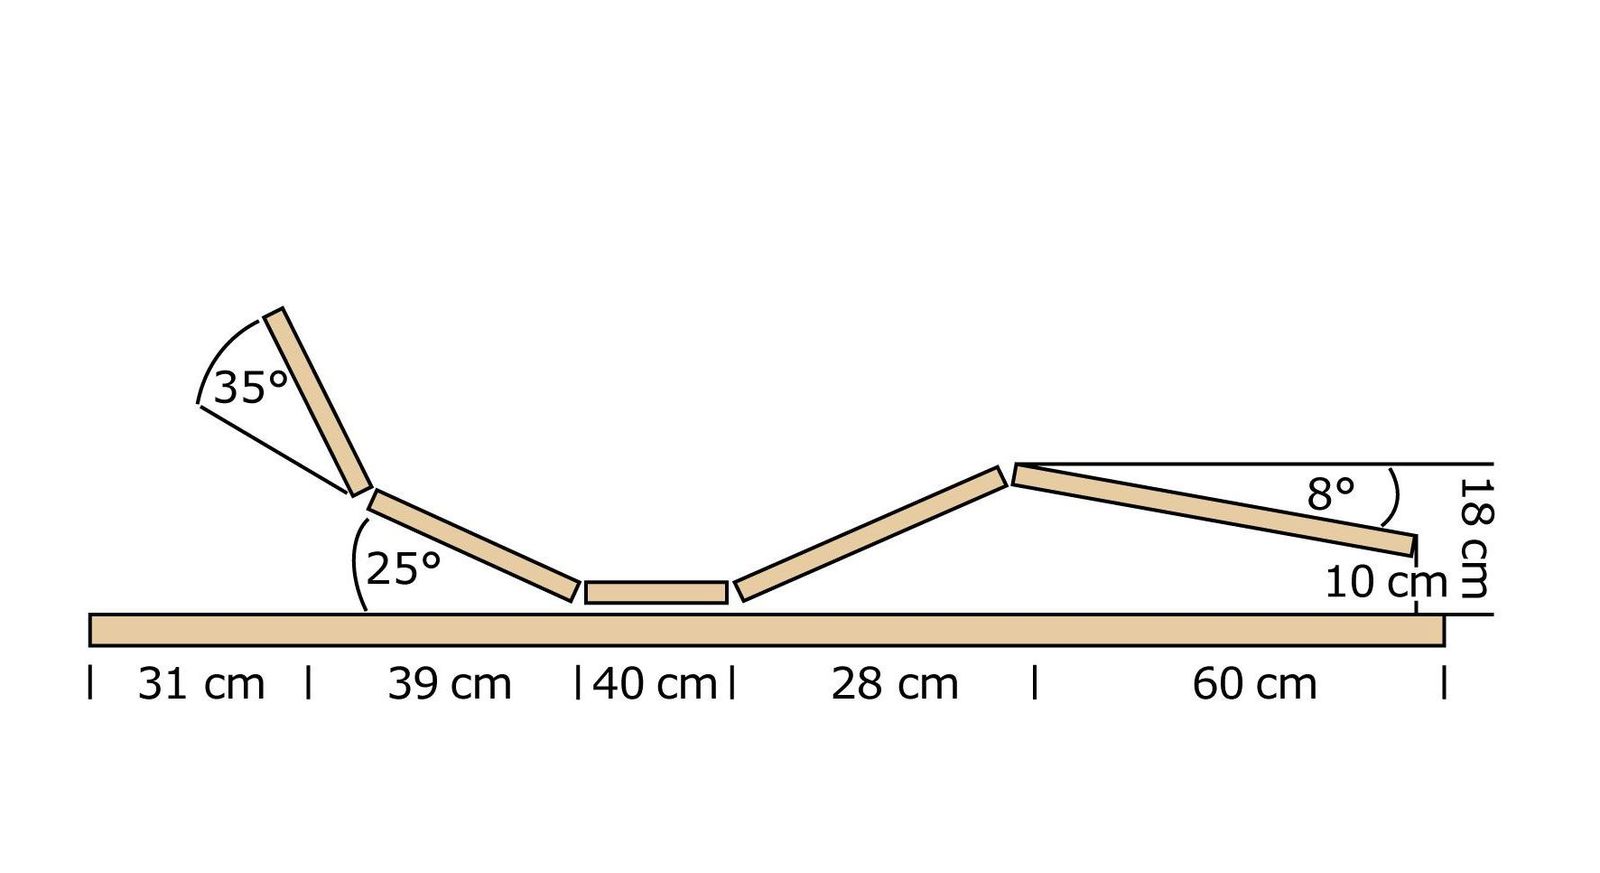 Grafik zur Verstellung vom Lattenrost orthowell ultraflex motor